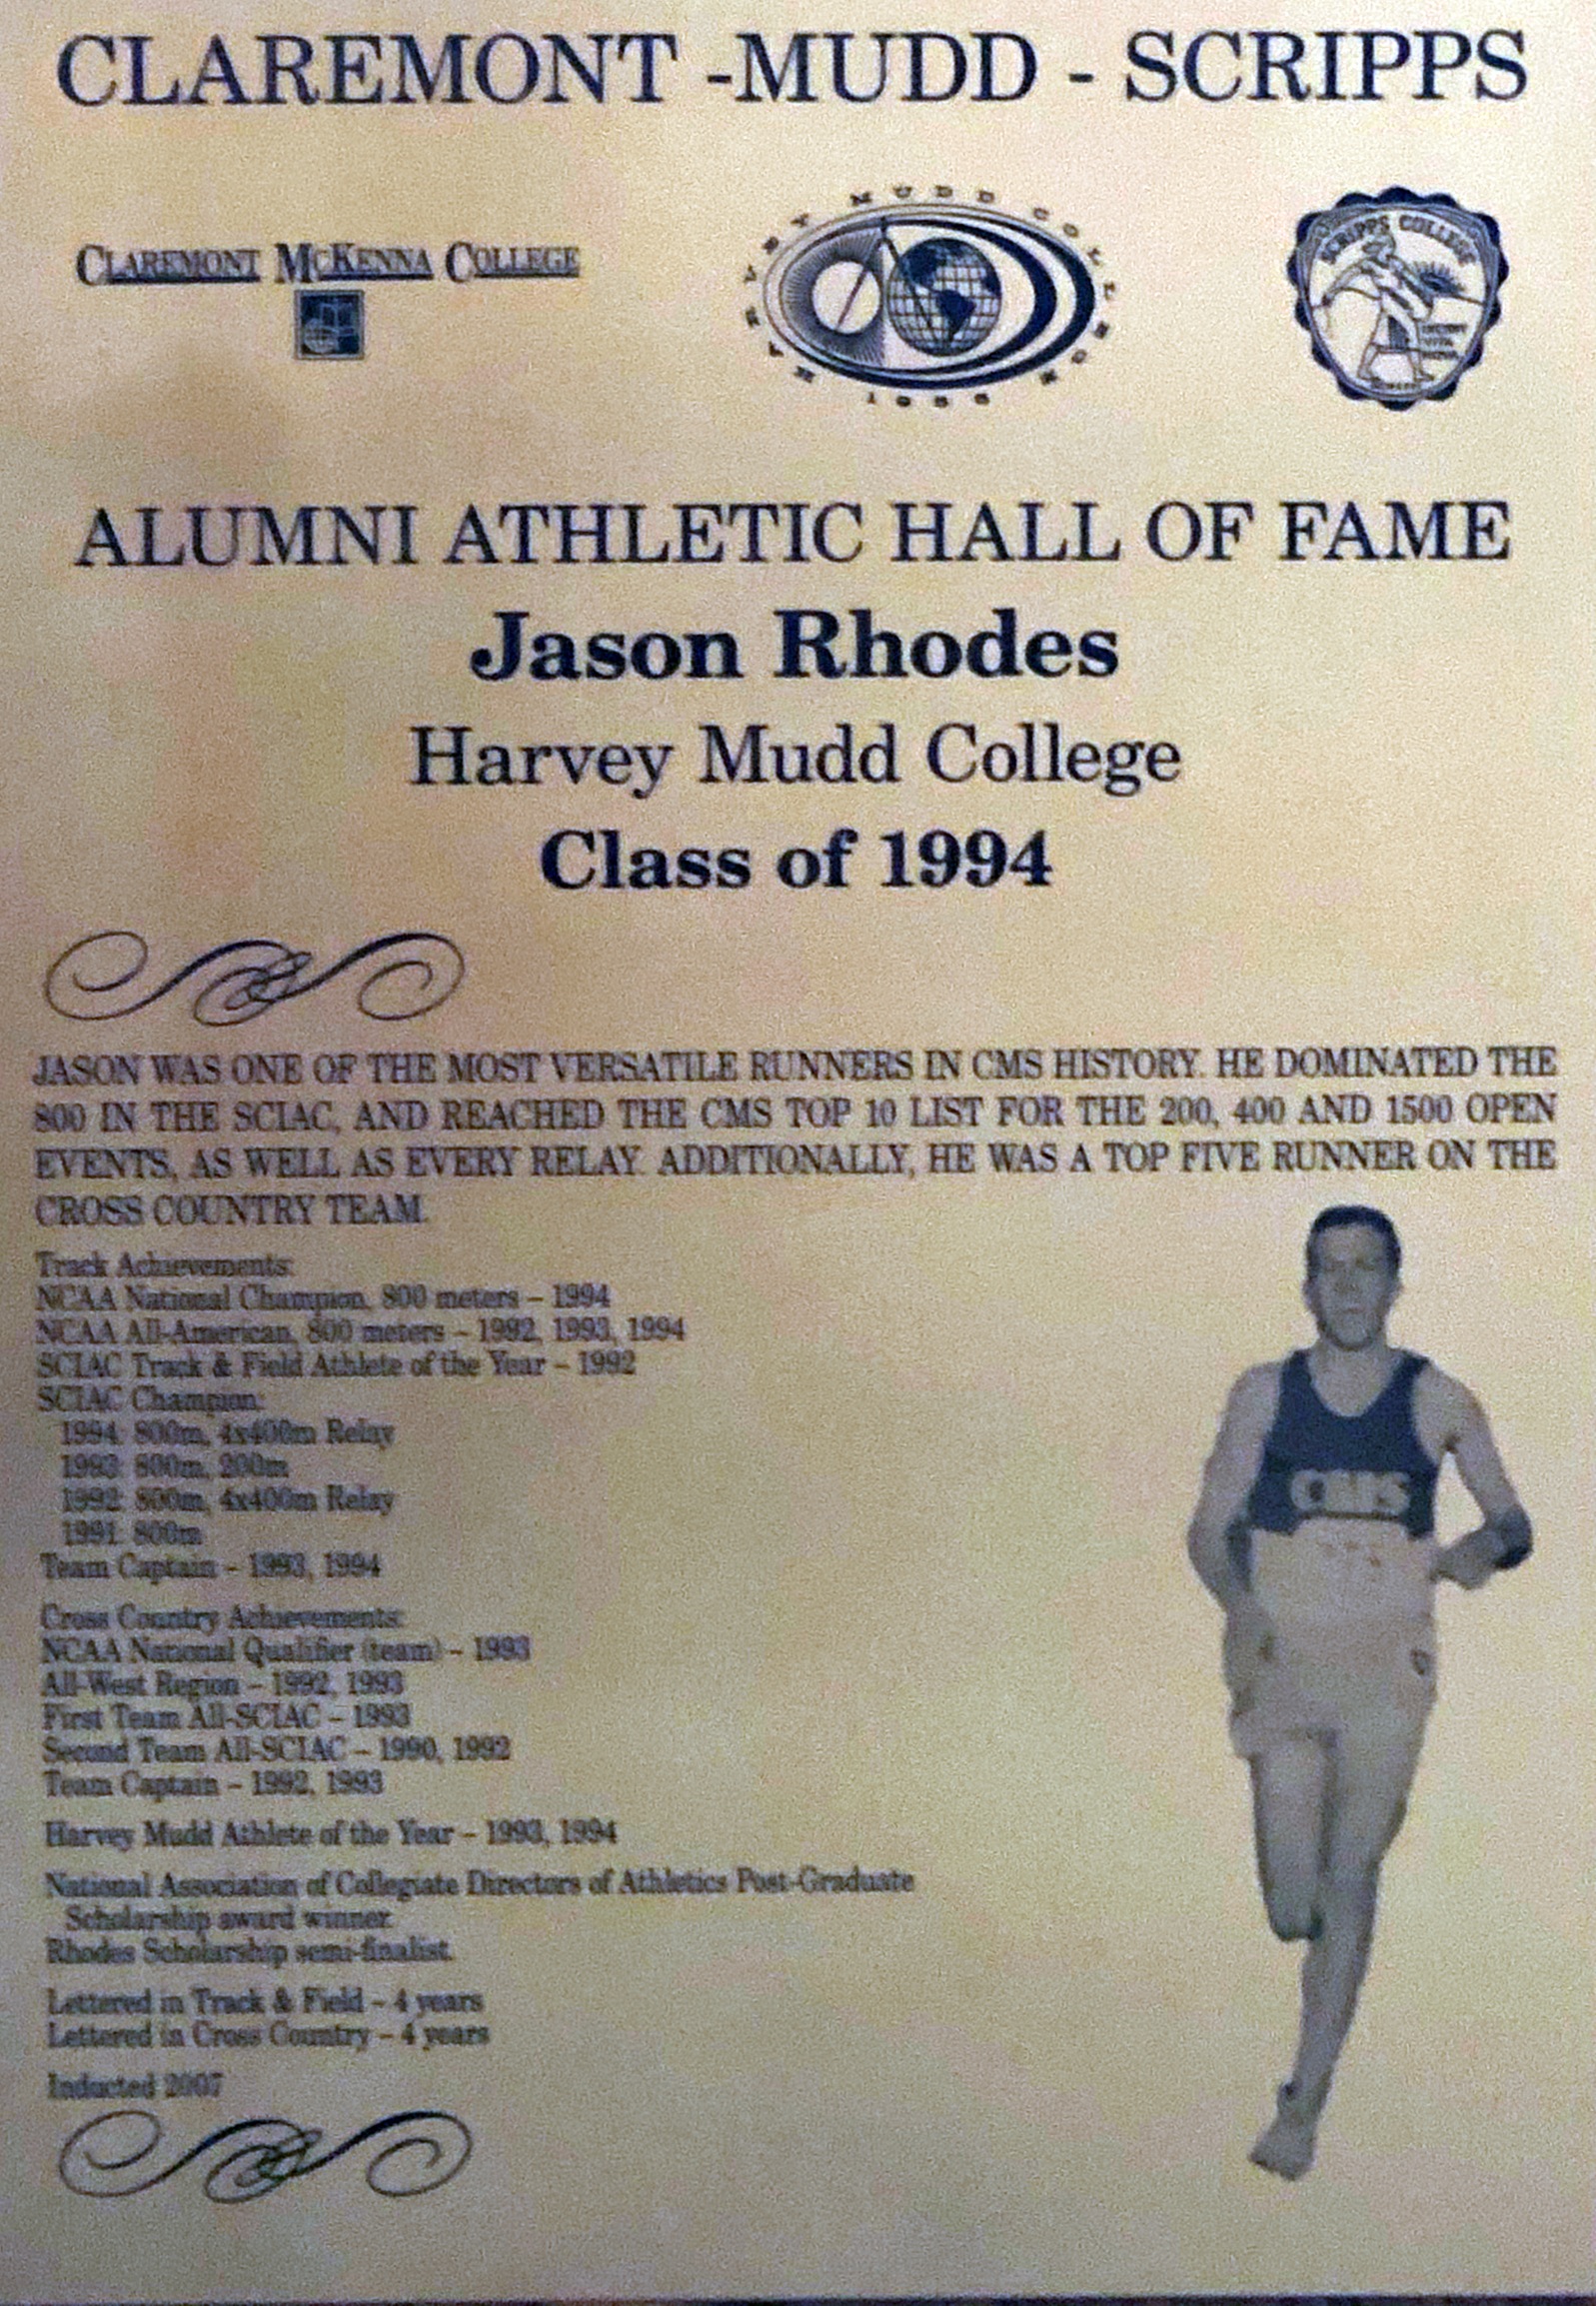 Jason Rhodes Hall of Fame plaque